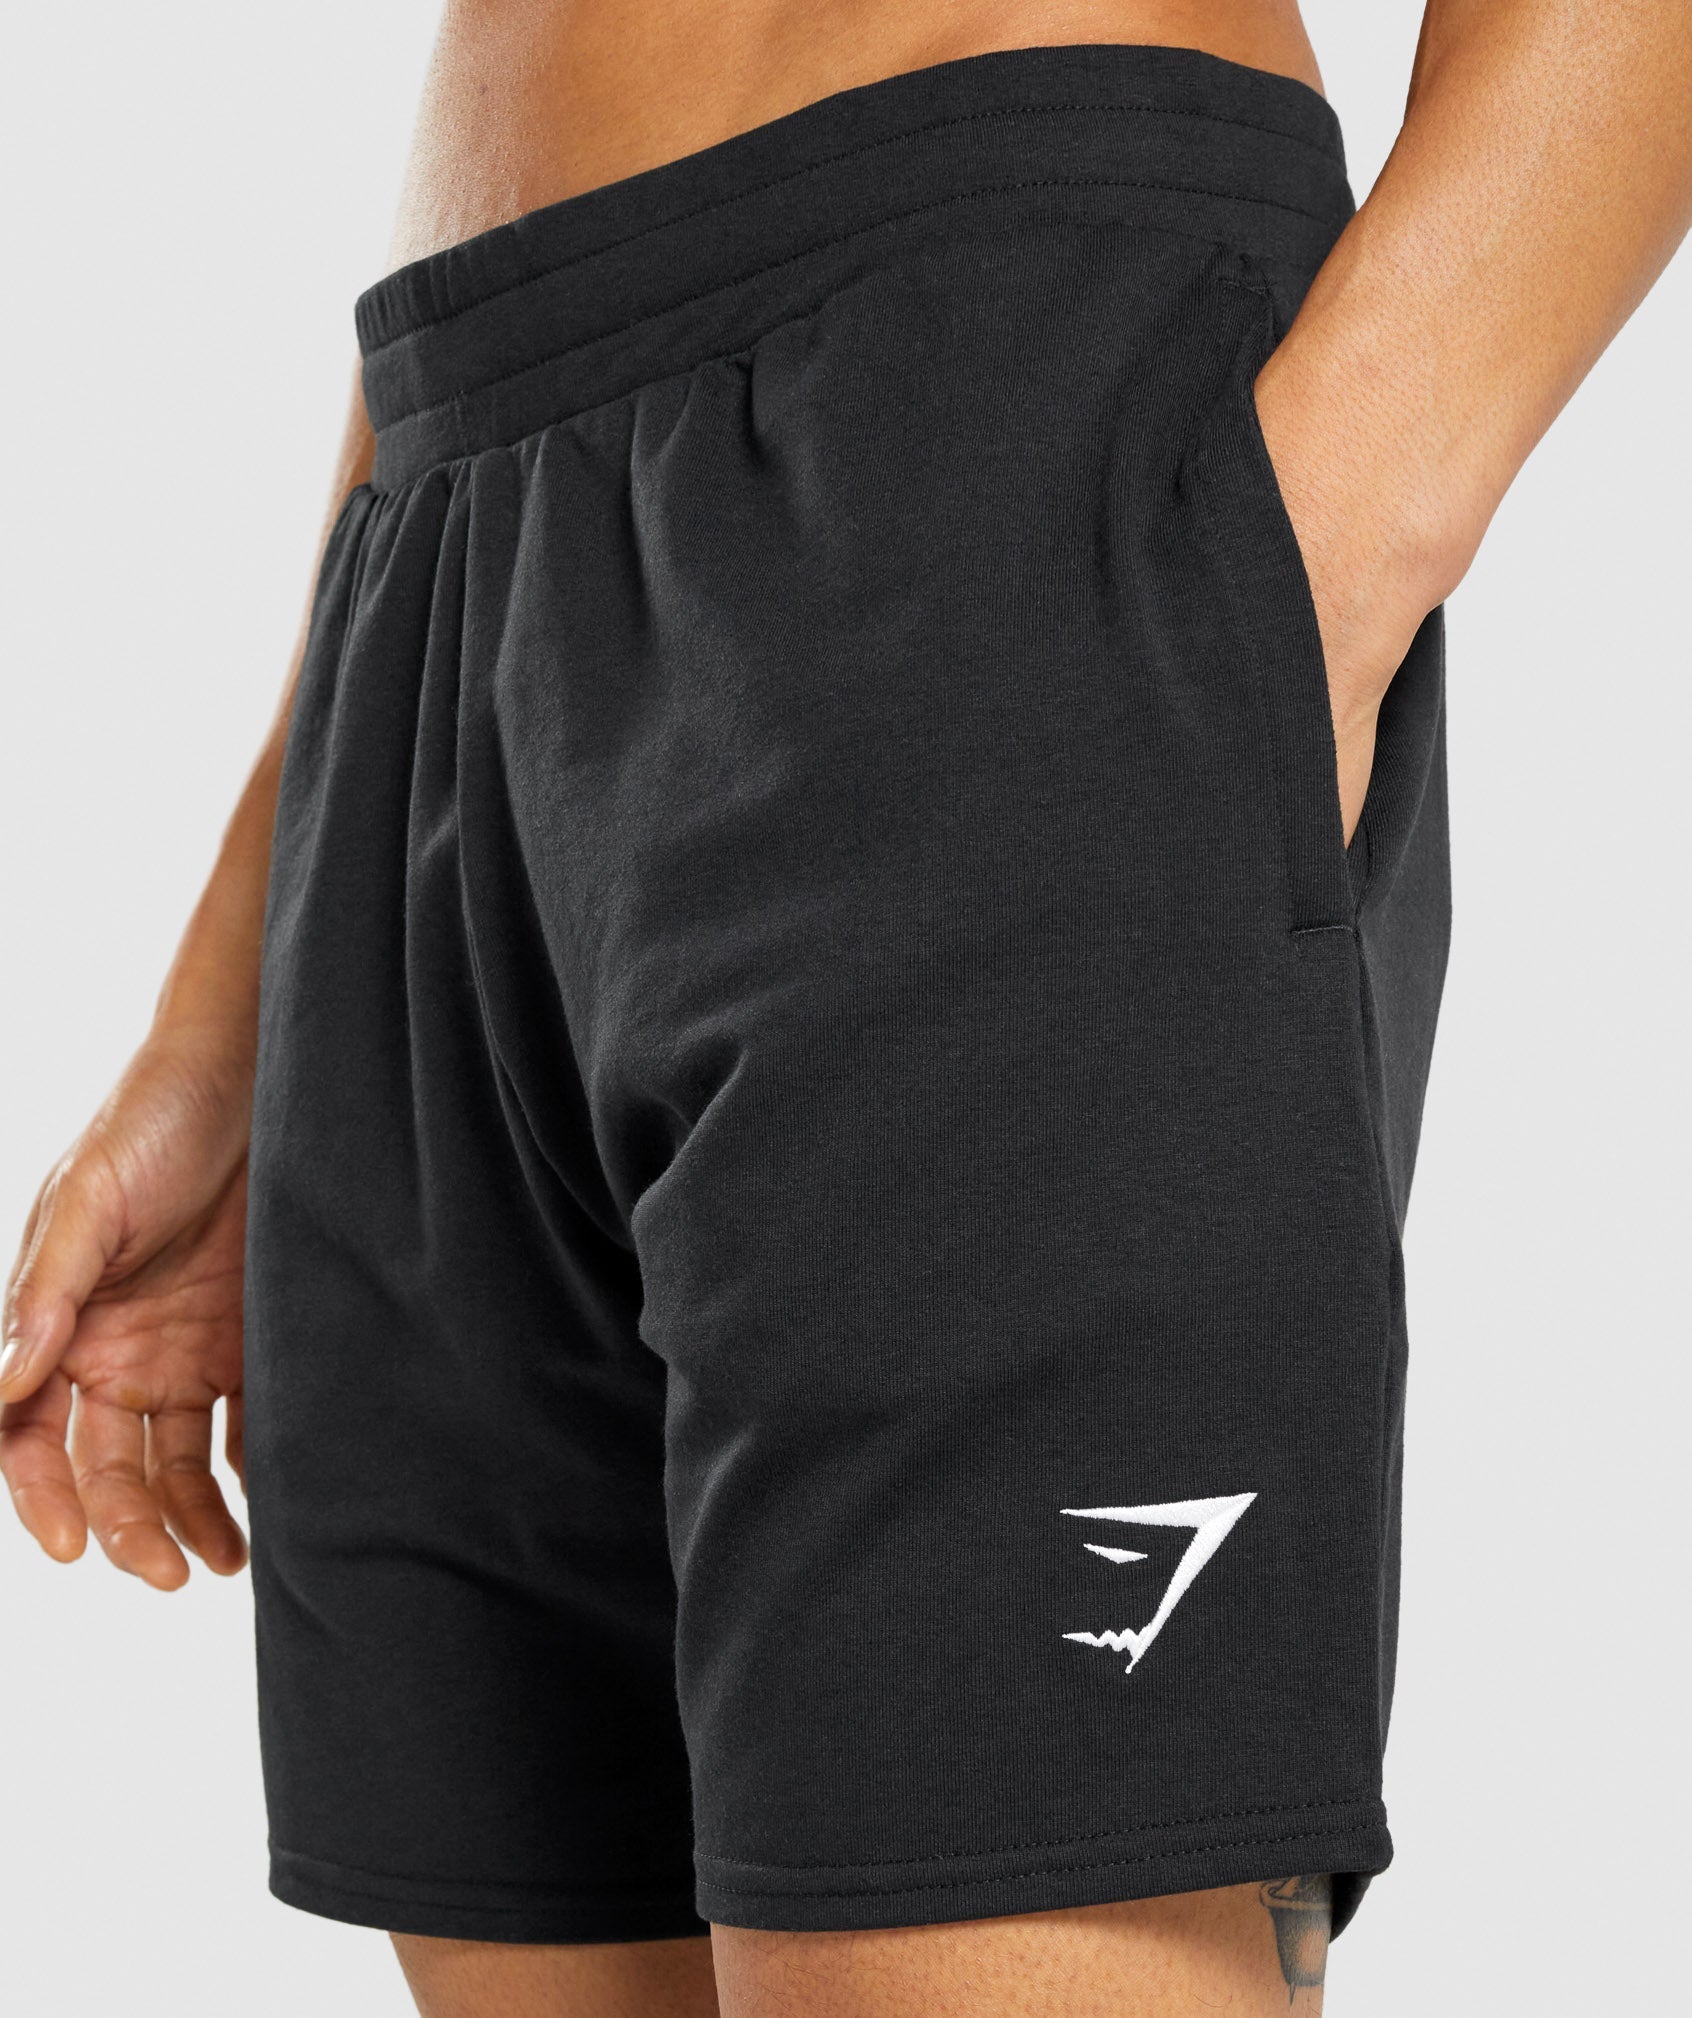 Essential 7 Shorts